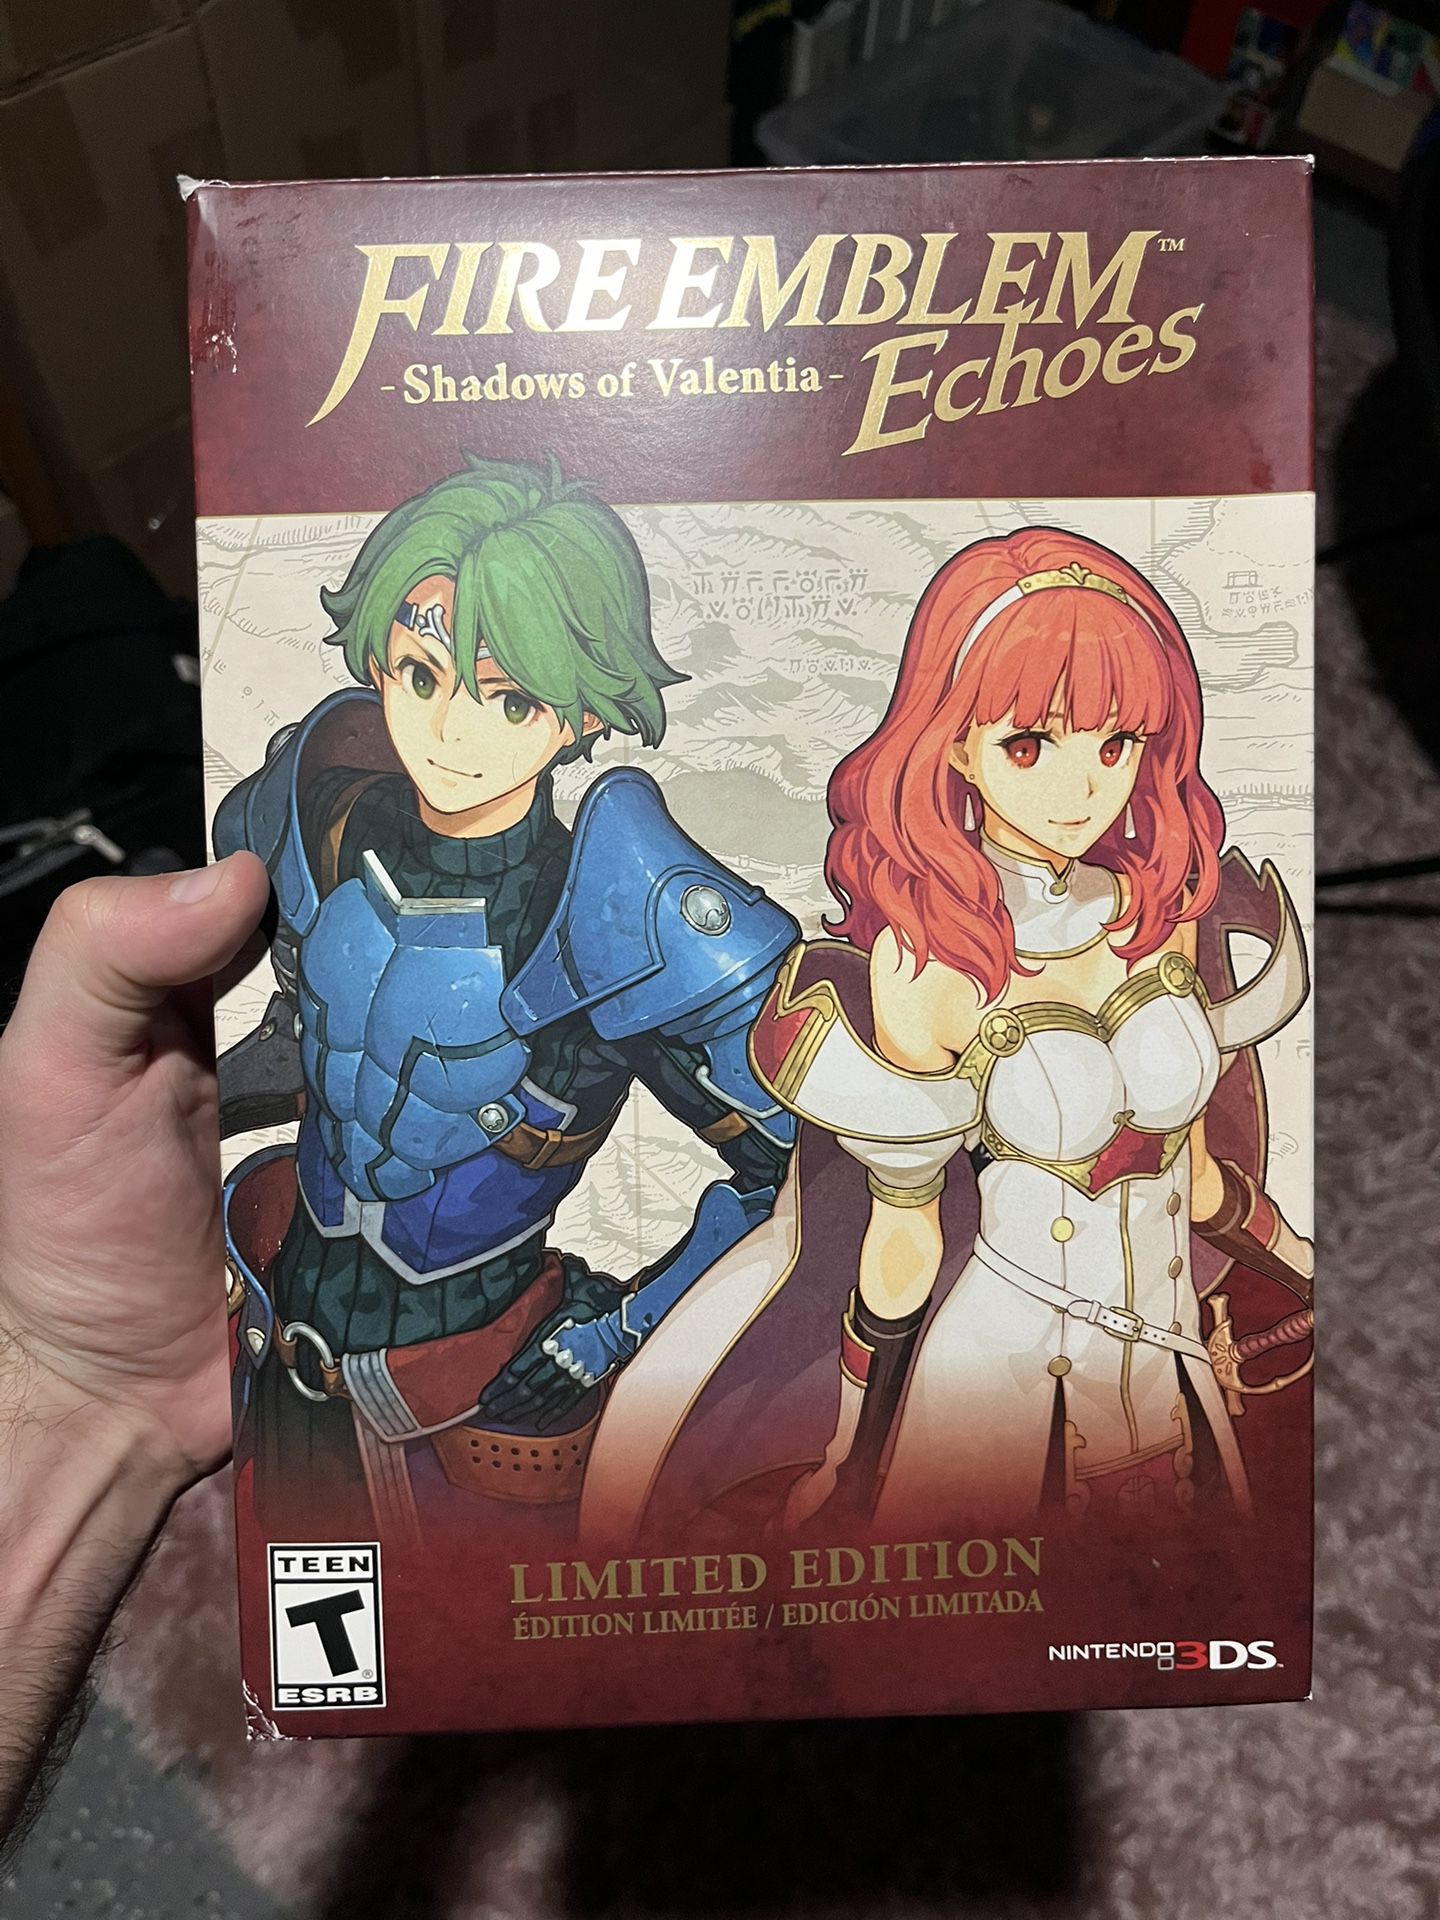 Fire Emblem Echoes Limited Edition Collectors Set For Nintendo 3DS